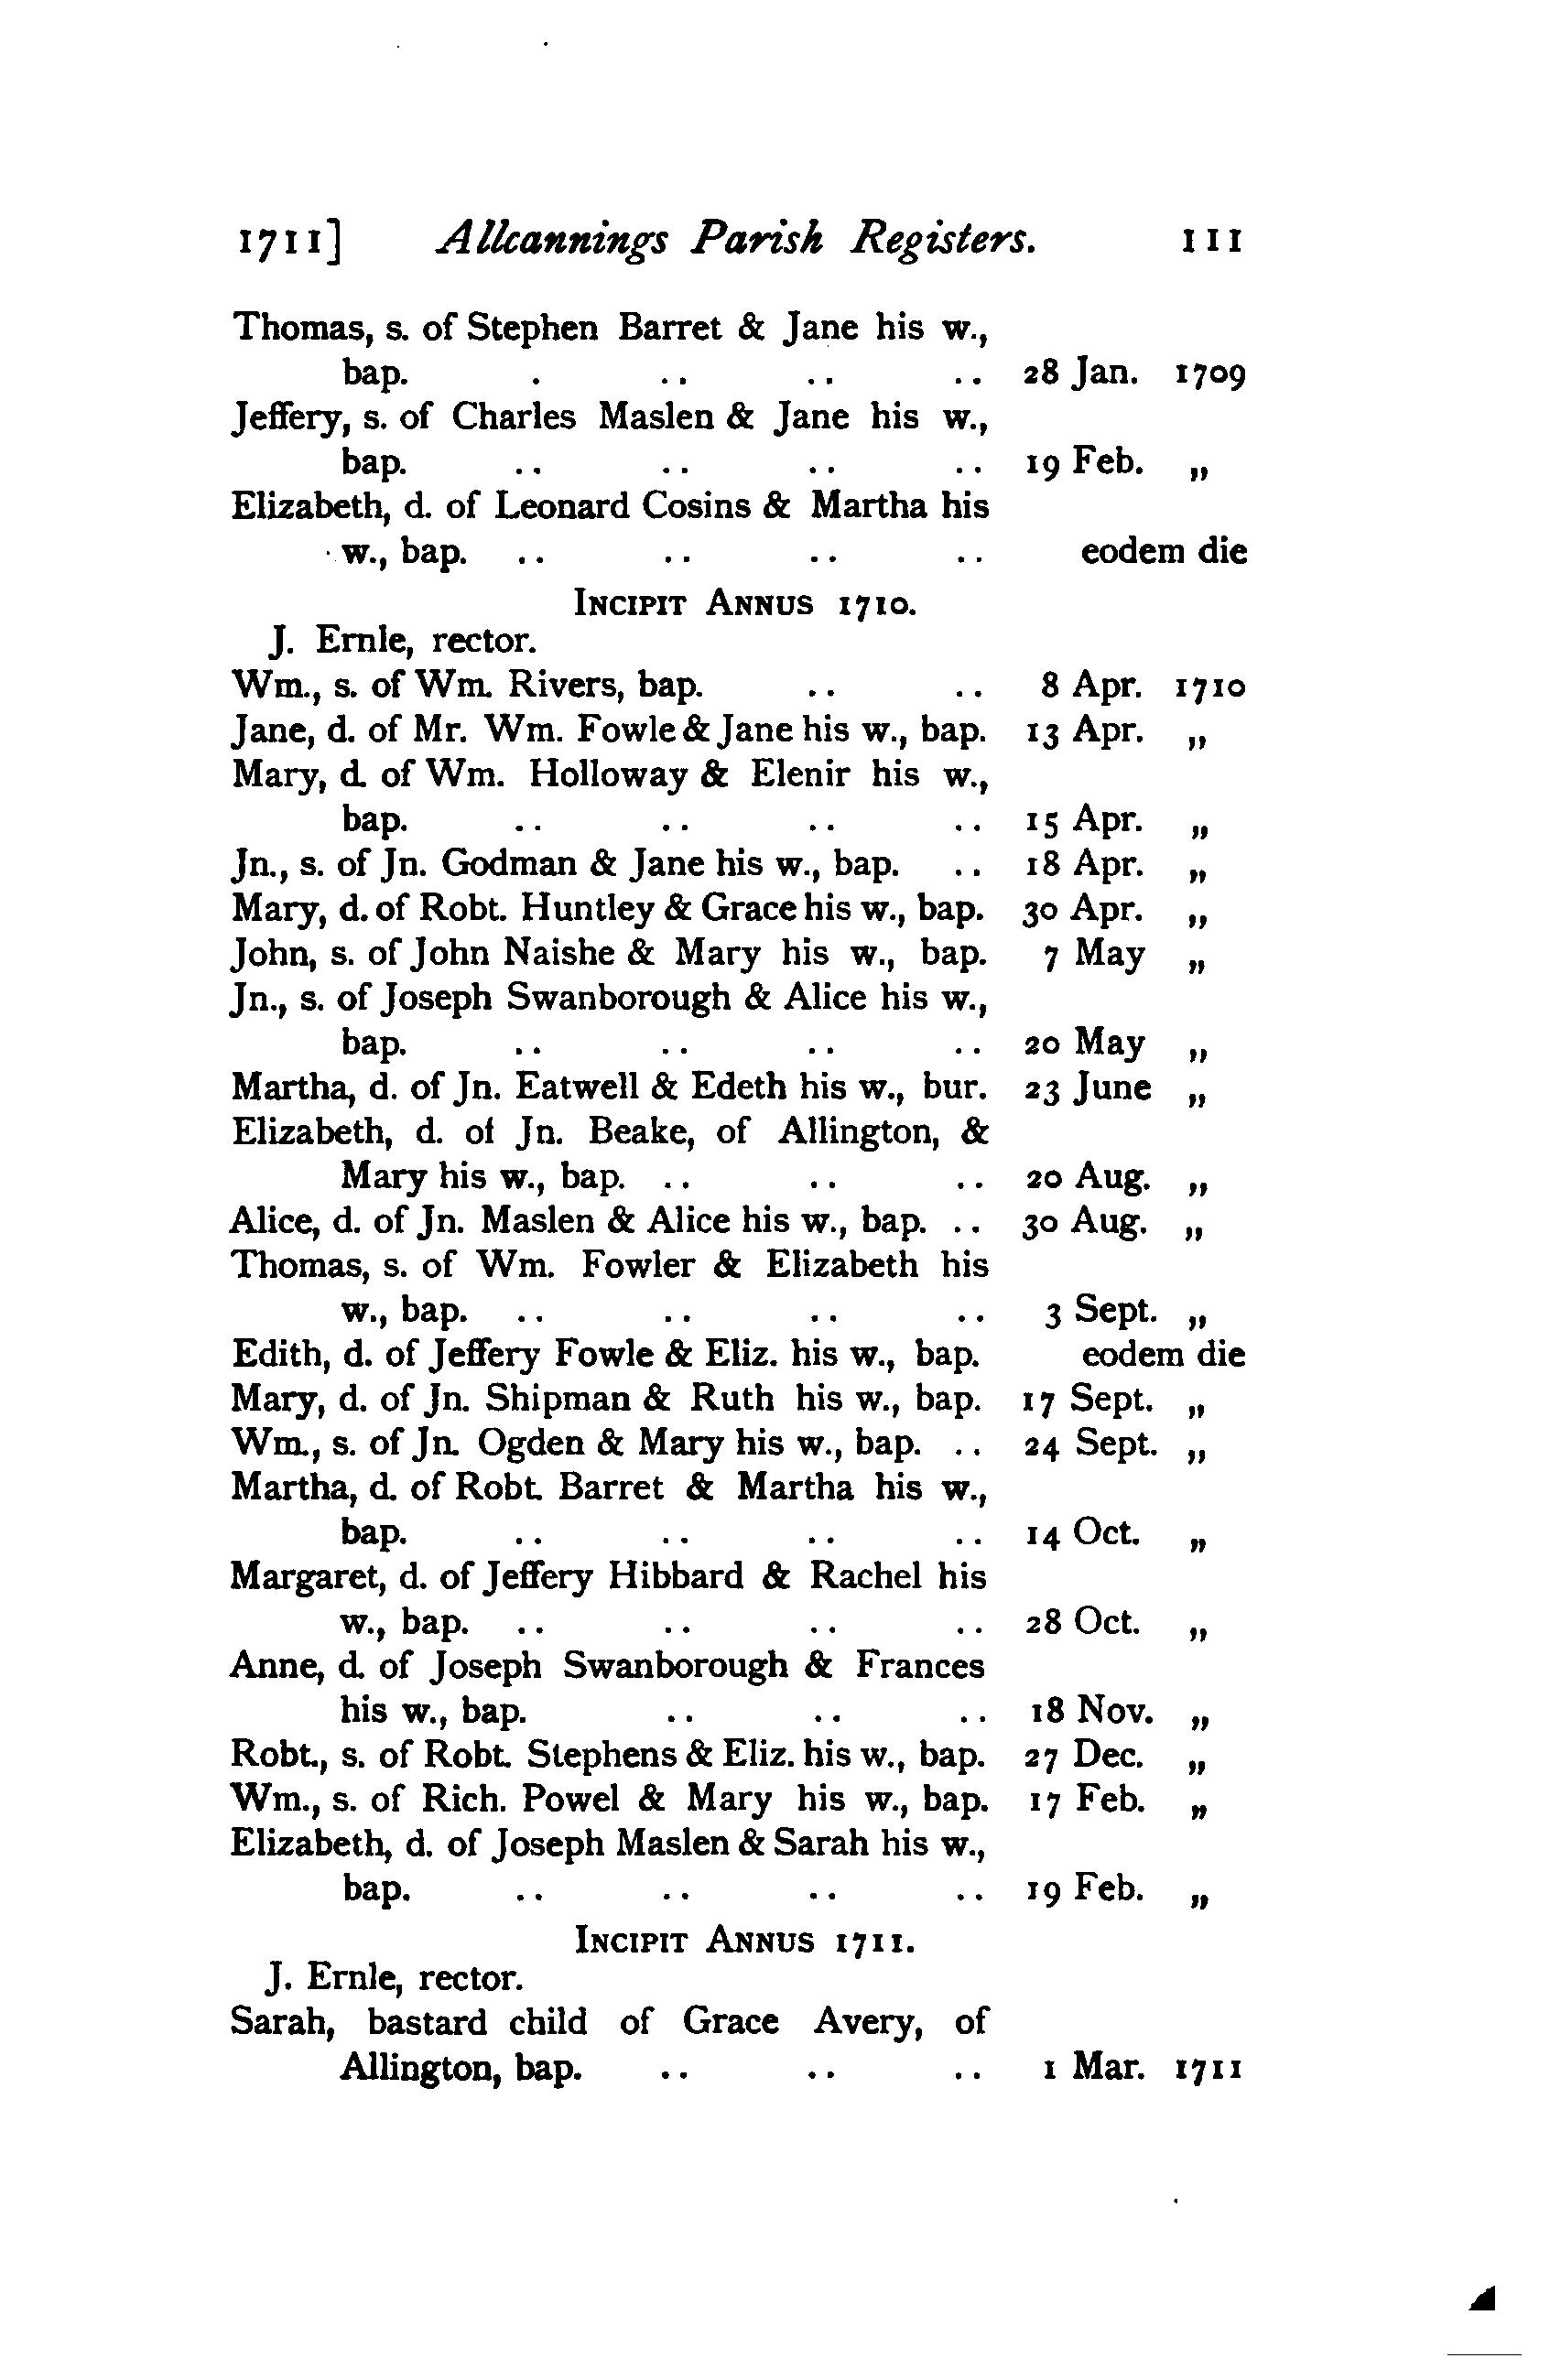 1905 transcript showing baptism of John Swanborough in 1710